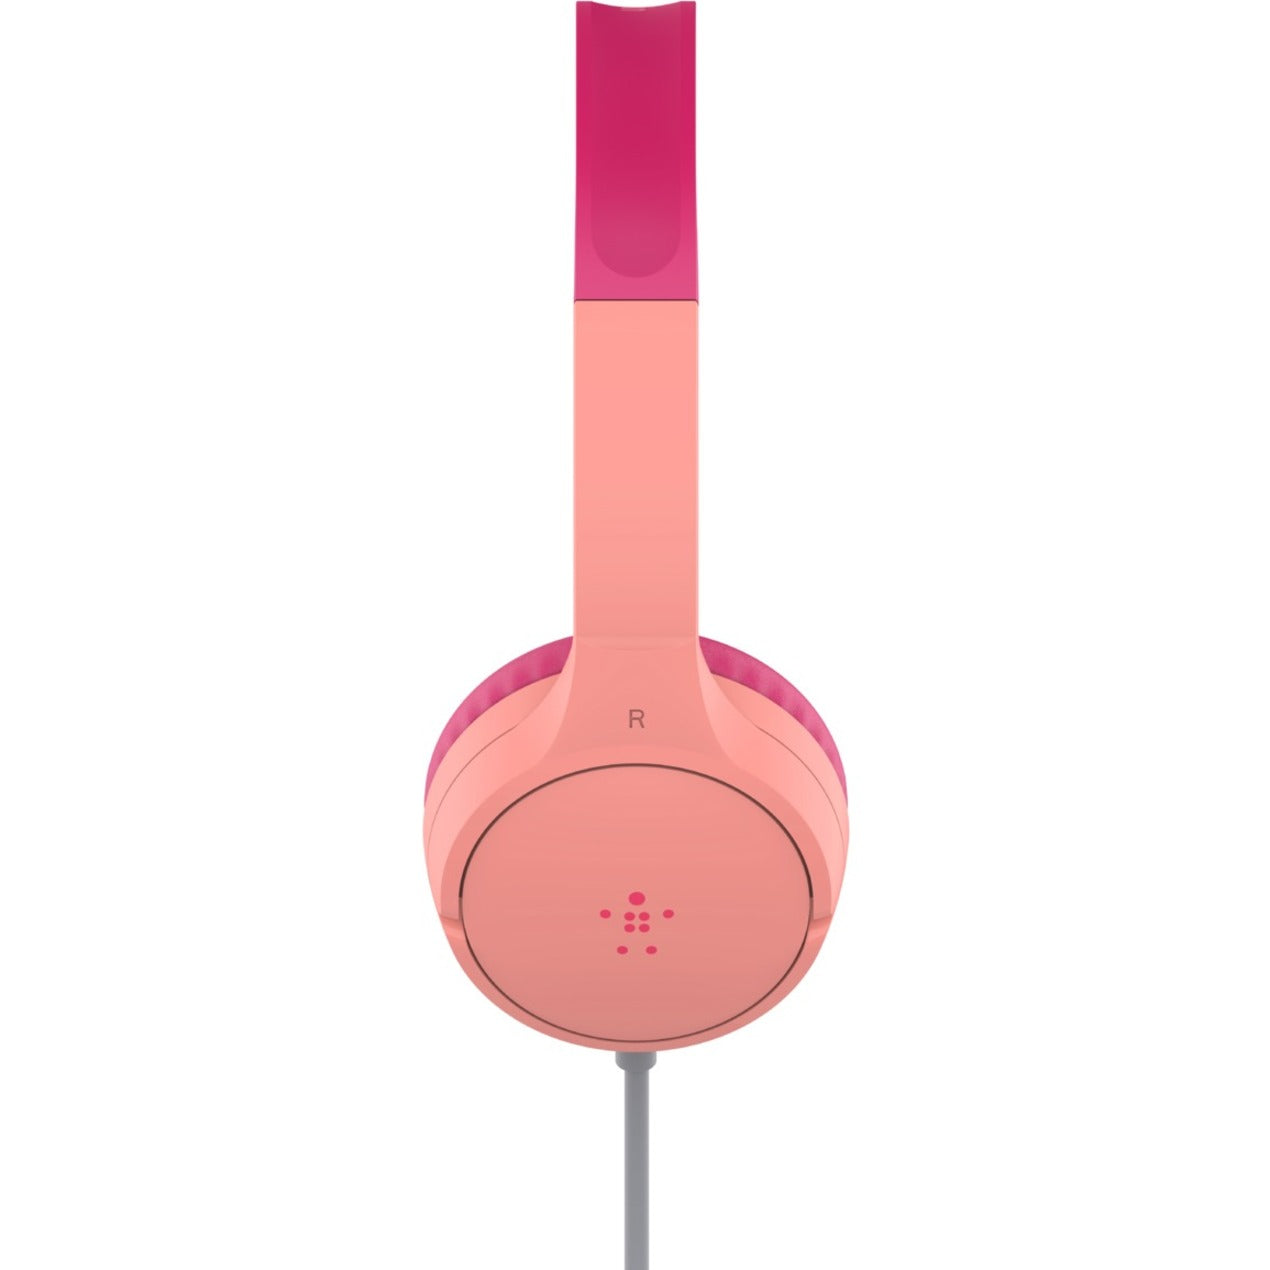 Belkin AUD004BTPK SoundForm Mini Wired On-Ear Headphones for Kids, Pink, Adjustable Headband, Volume Limiter